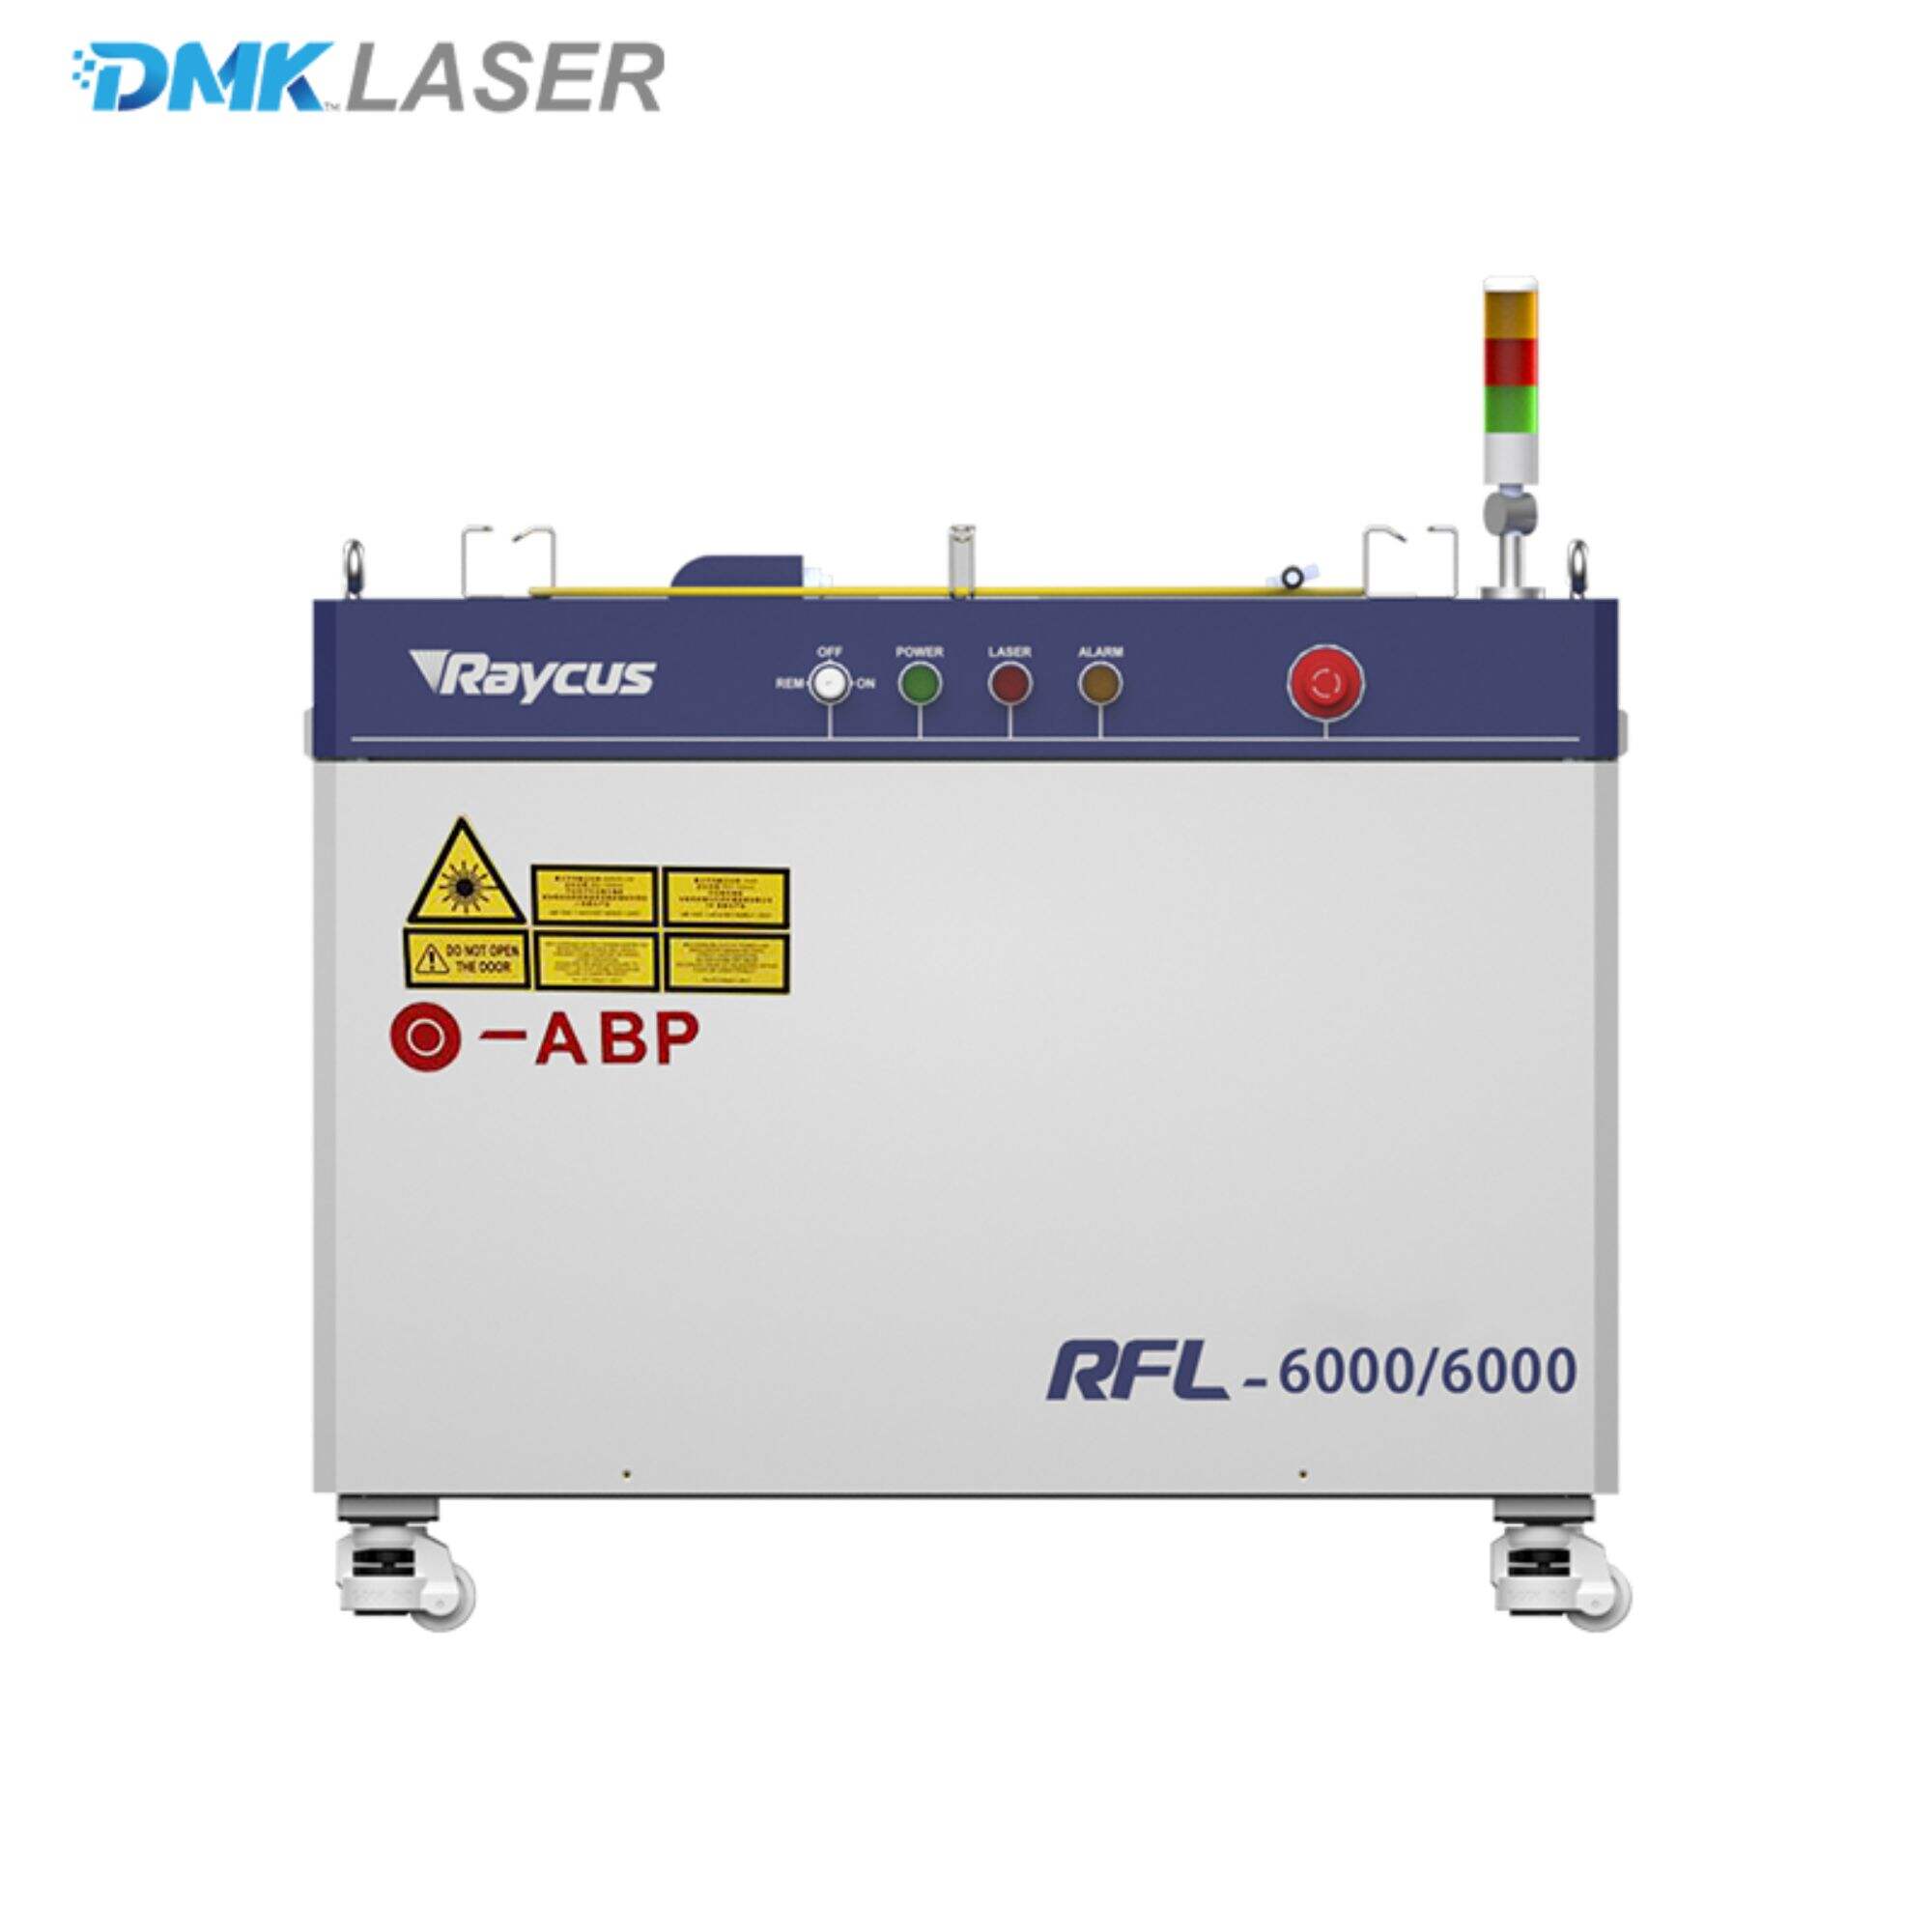 Raycus RFL-ABP High Power Fiber Laser Source